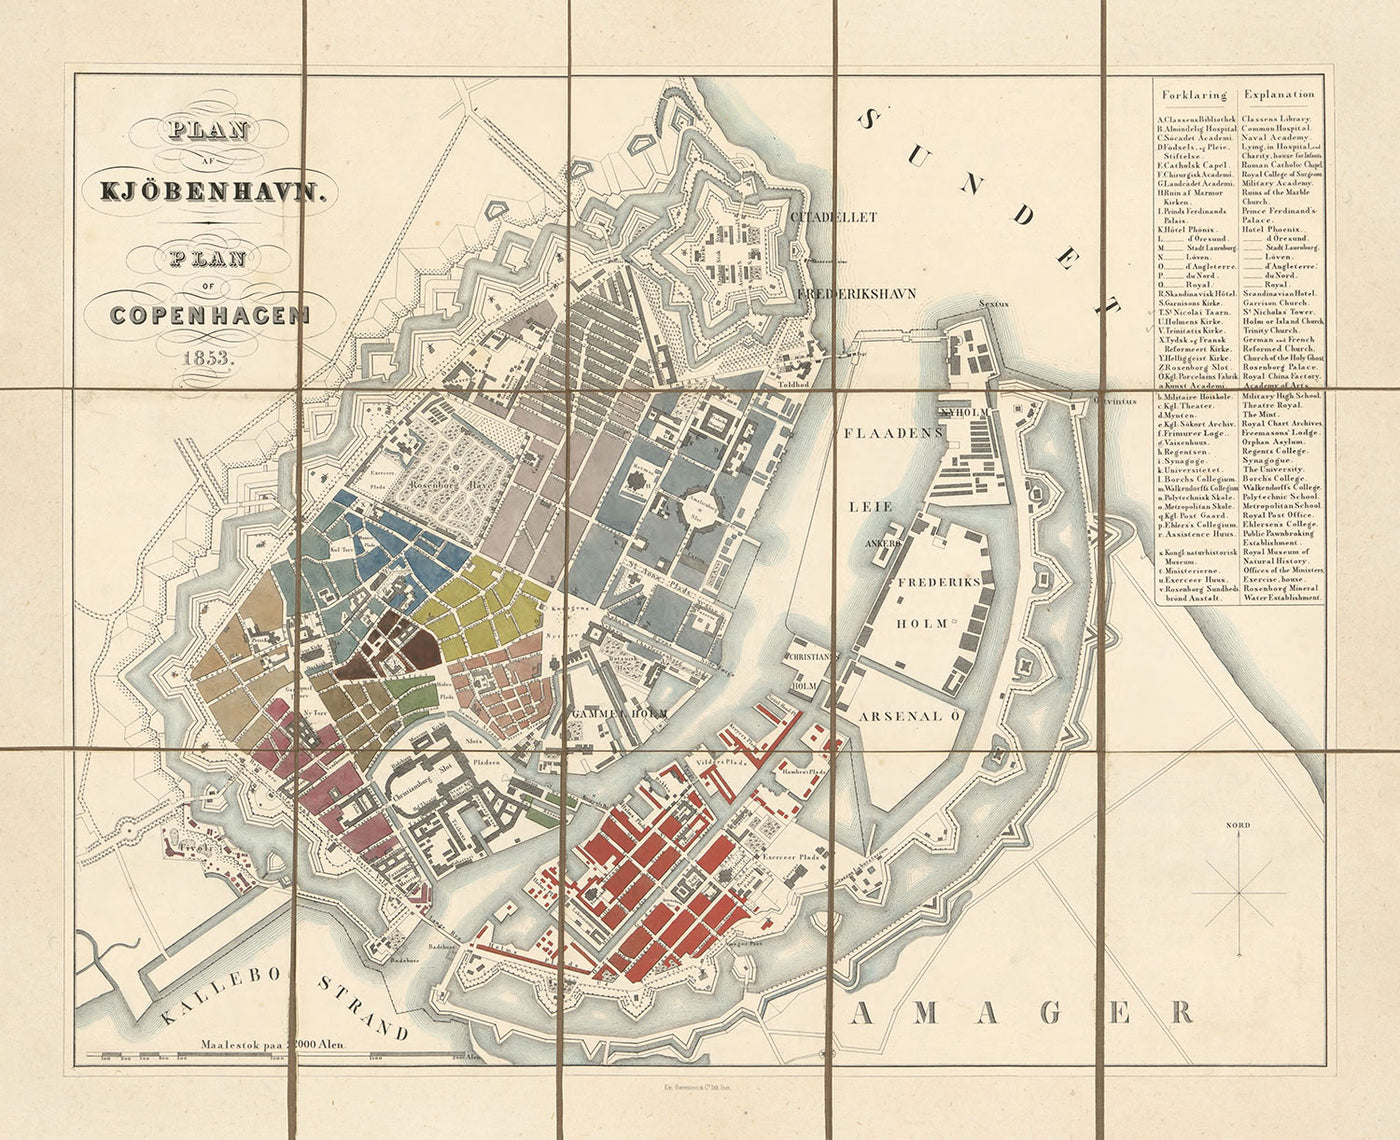 Old Street Map of Copenhagen in 1853 by Millard Fillmore - Borsen, Holmen, Kastellet, Christianshavn, Slotsholmen